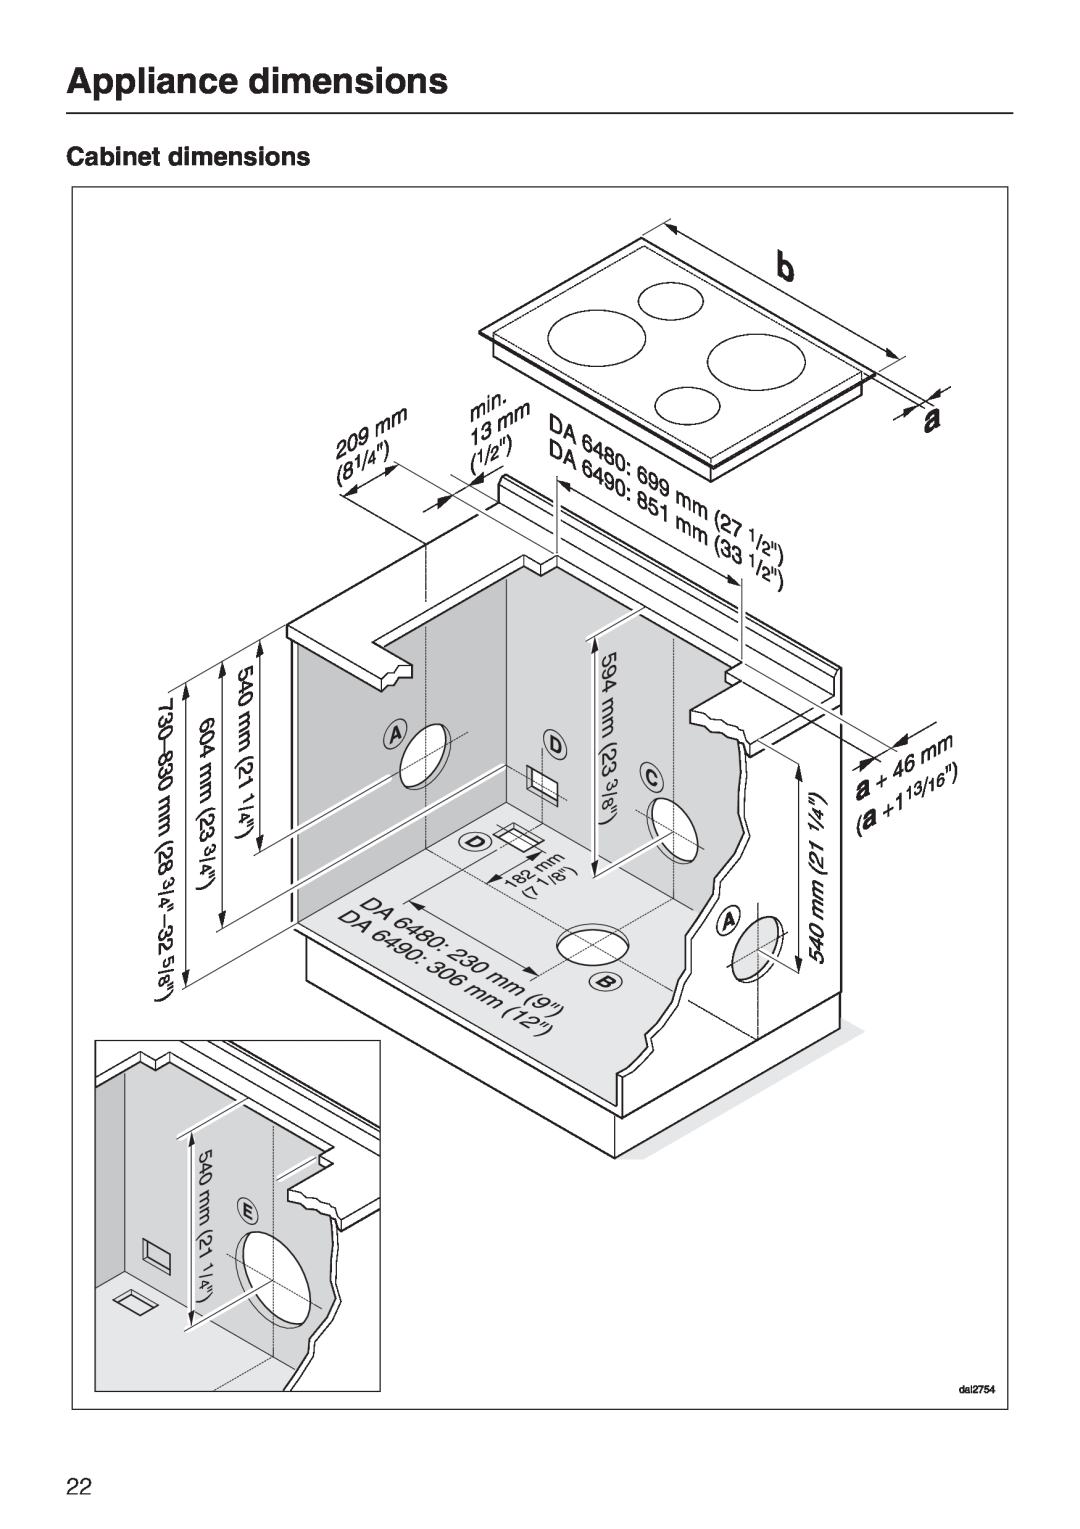 Miele DAG 500, DA 6490, DA 6480, DAG 1000 installation instructions Cabinet dimensions, Appliance dimensions 